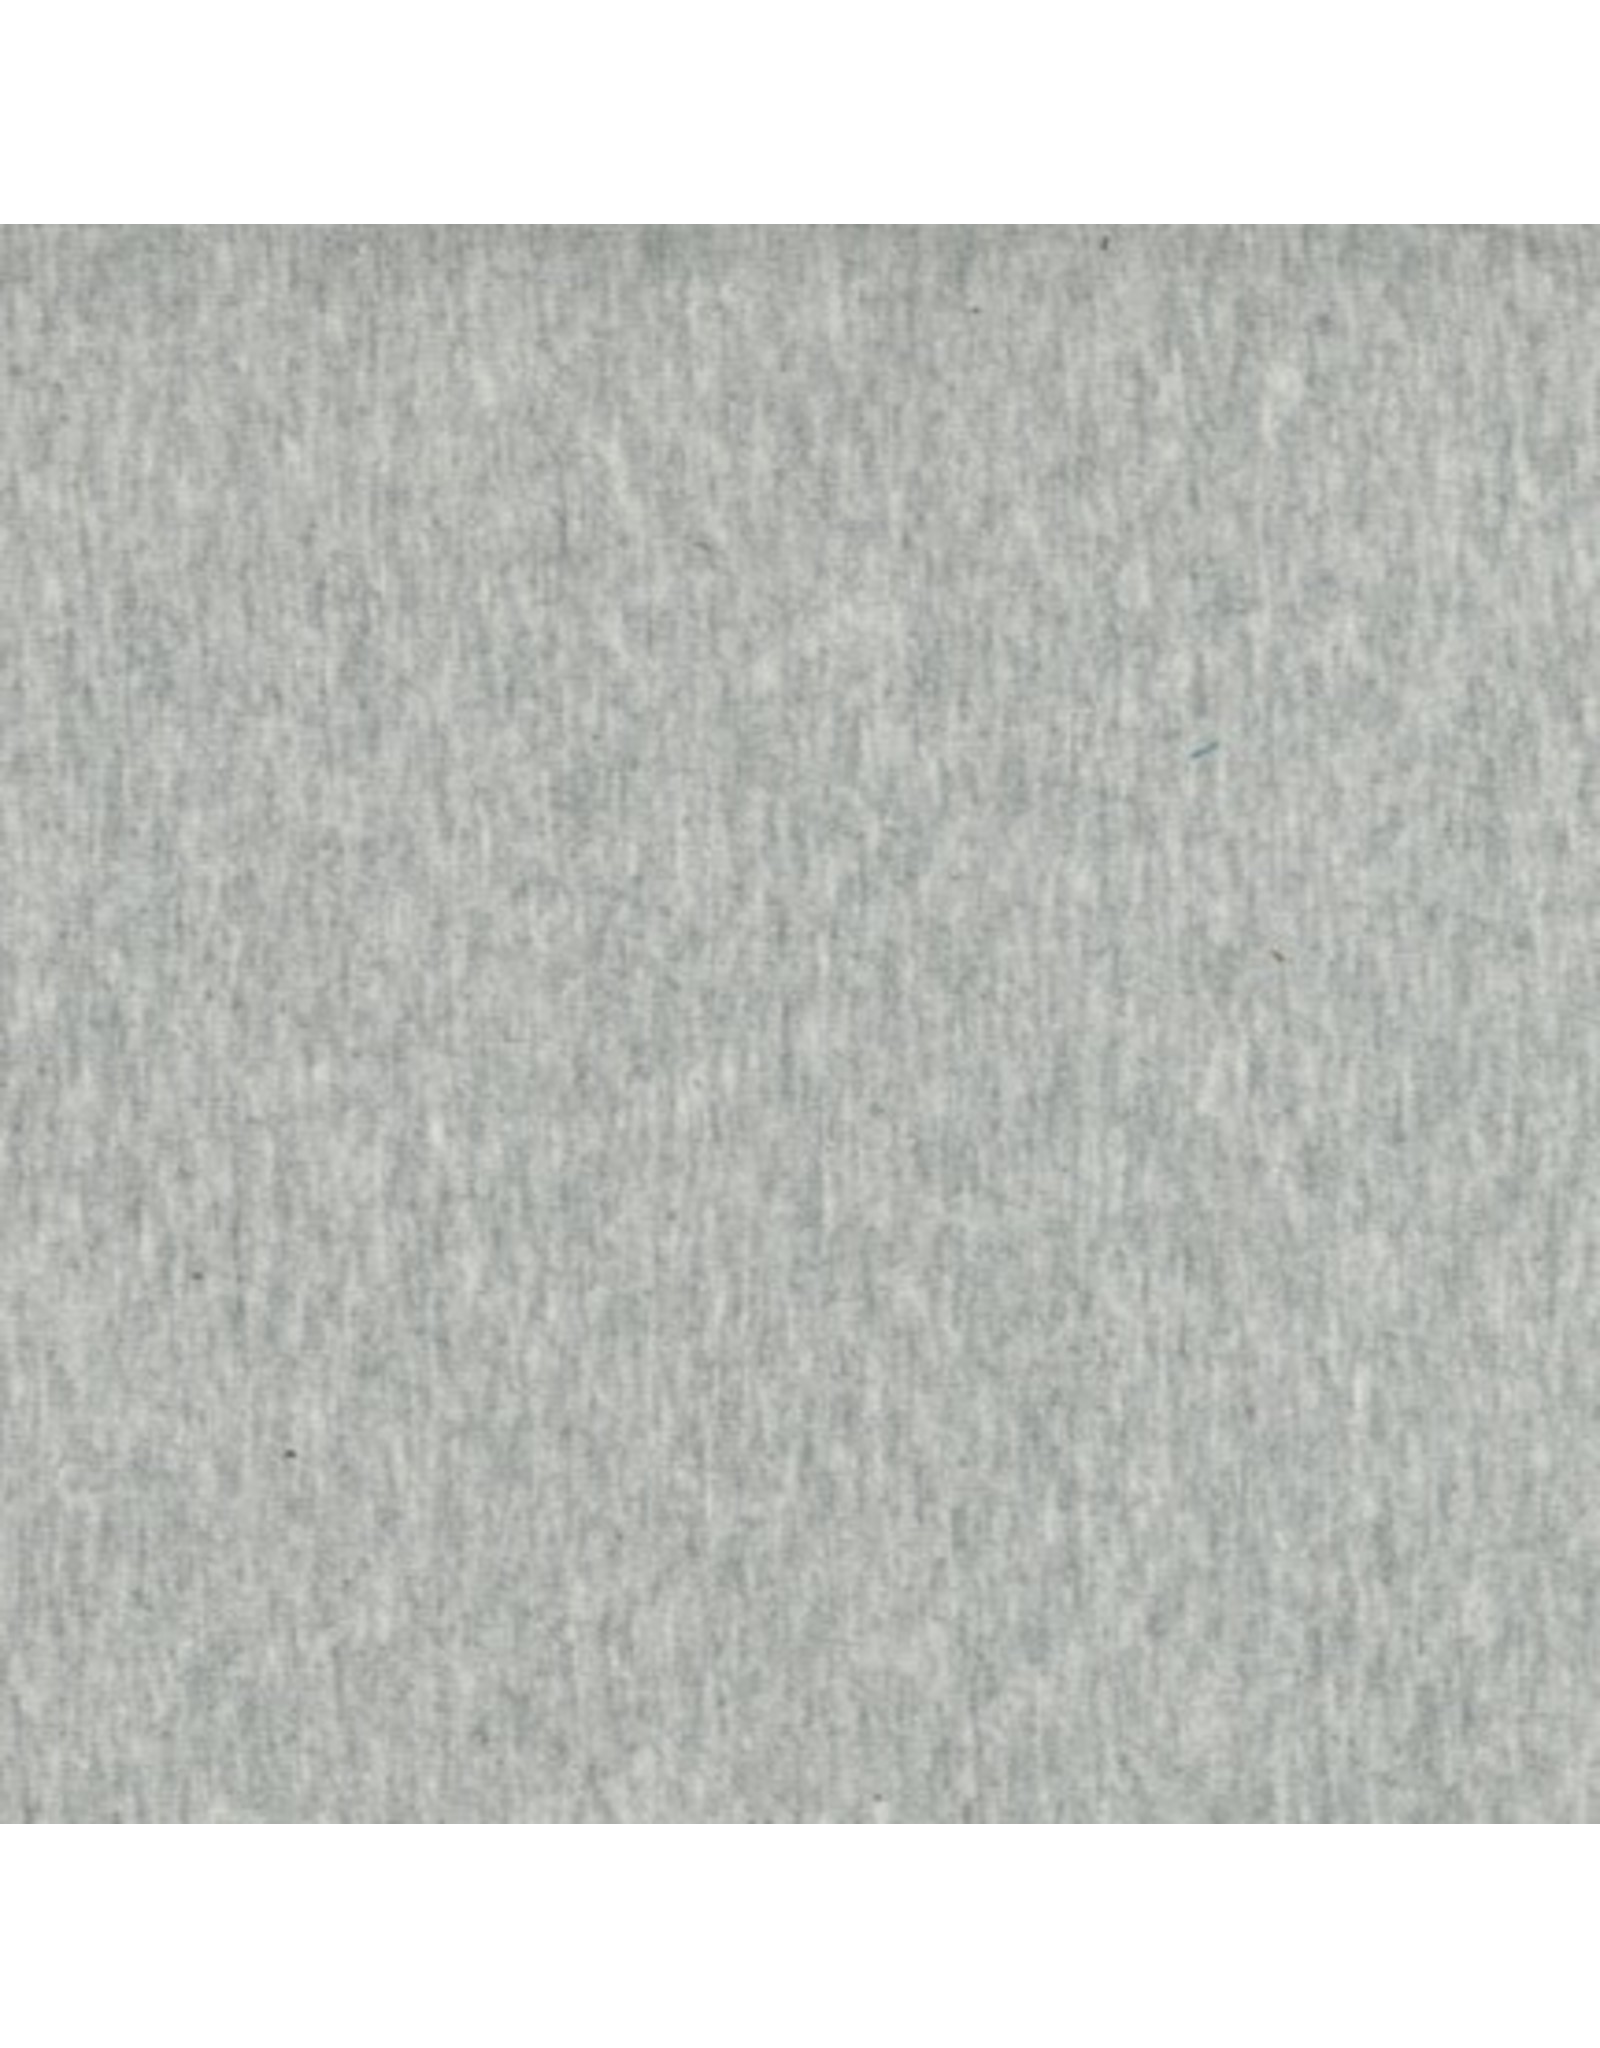 Robert Kaufman Laguna Lightweight Jersey Knit in Grey Heather, Fabric Half-Yards